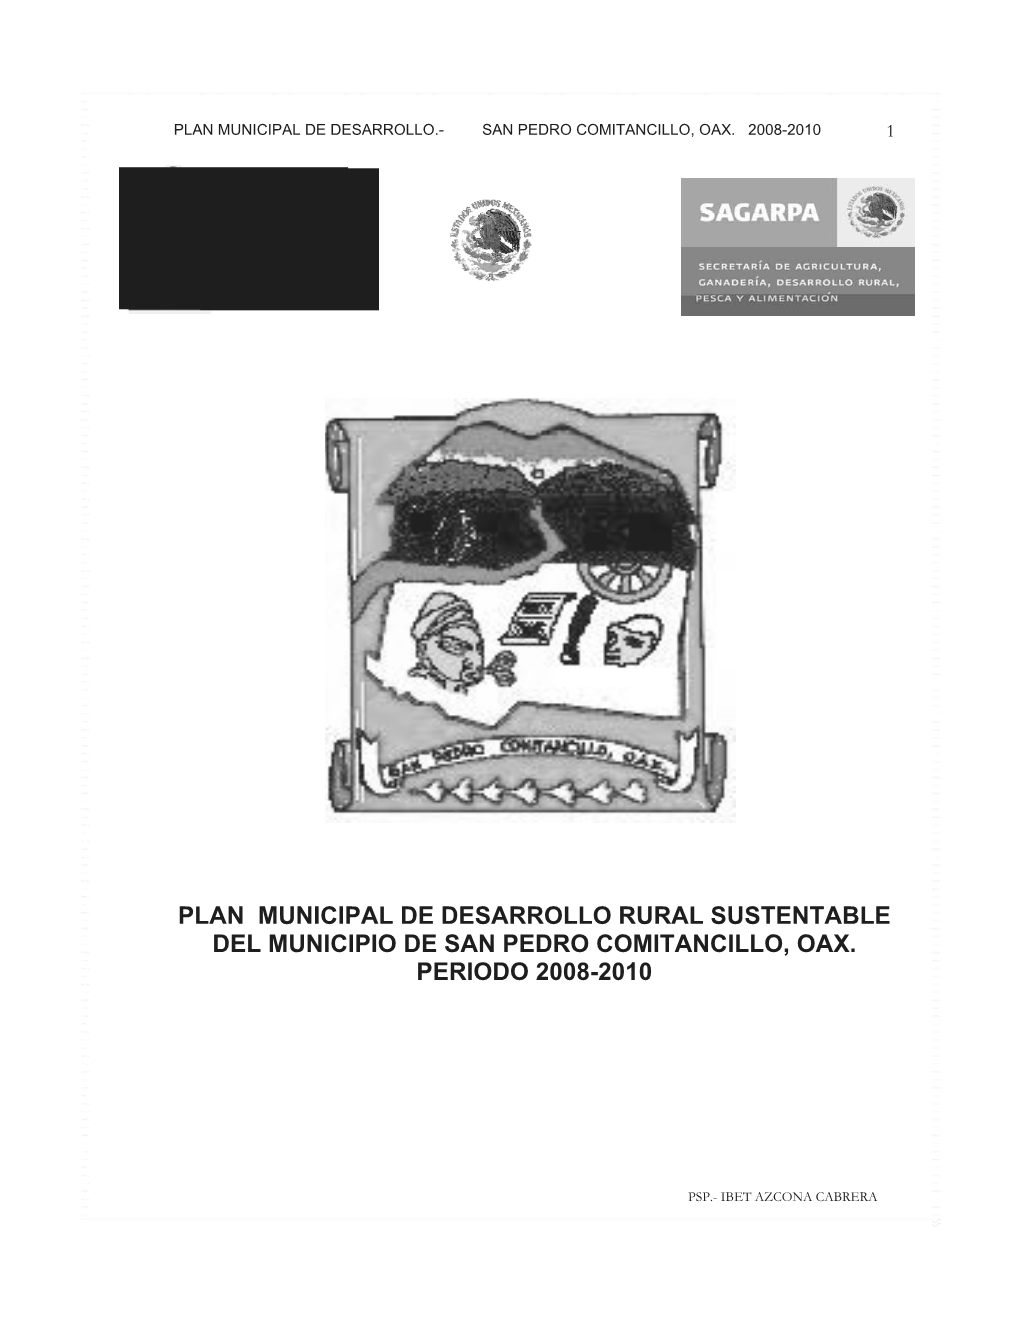 Plan Municipal De Desarrollo Rural Sustentable Del Municipio De San Pedro Comitancillo, Oax